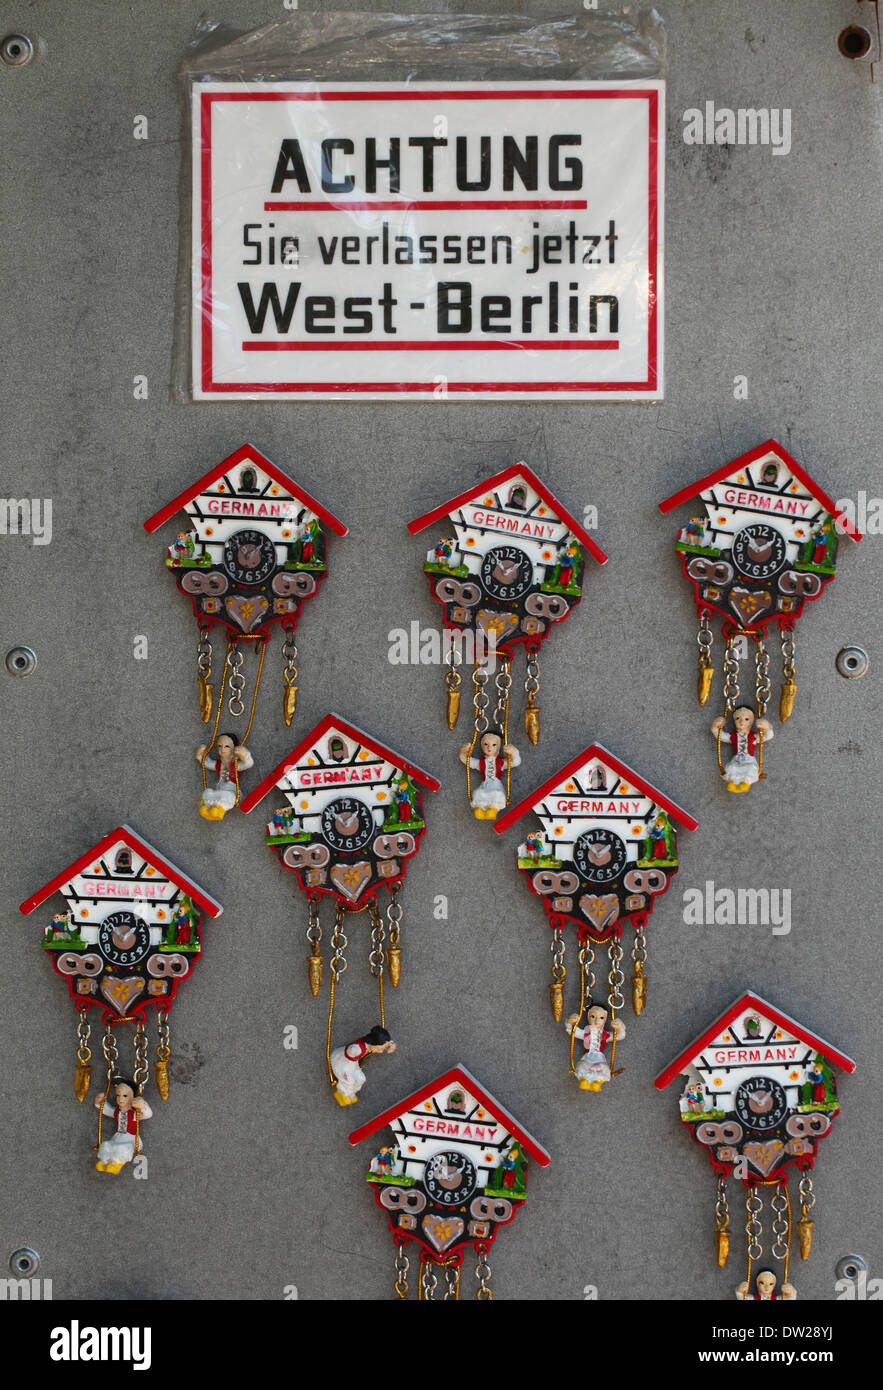 Achtung West Berlin steel fridge magnet na